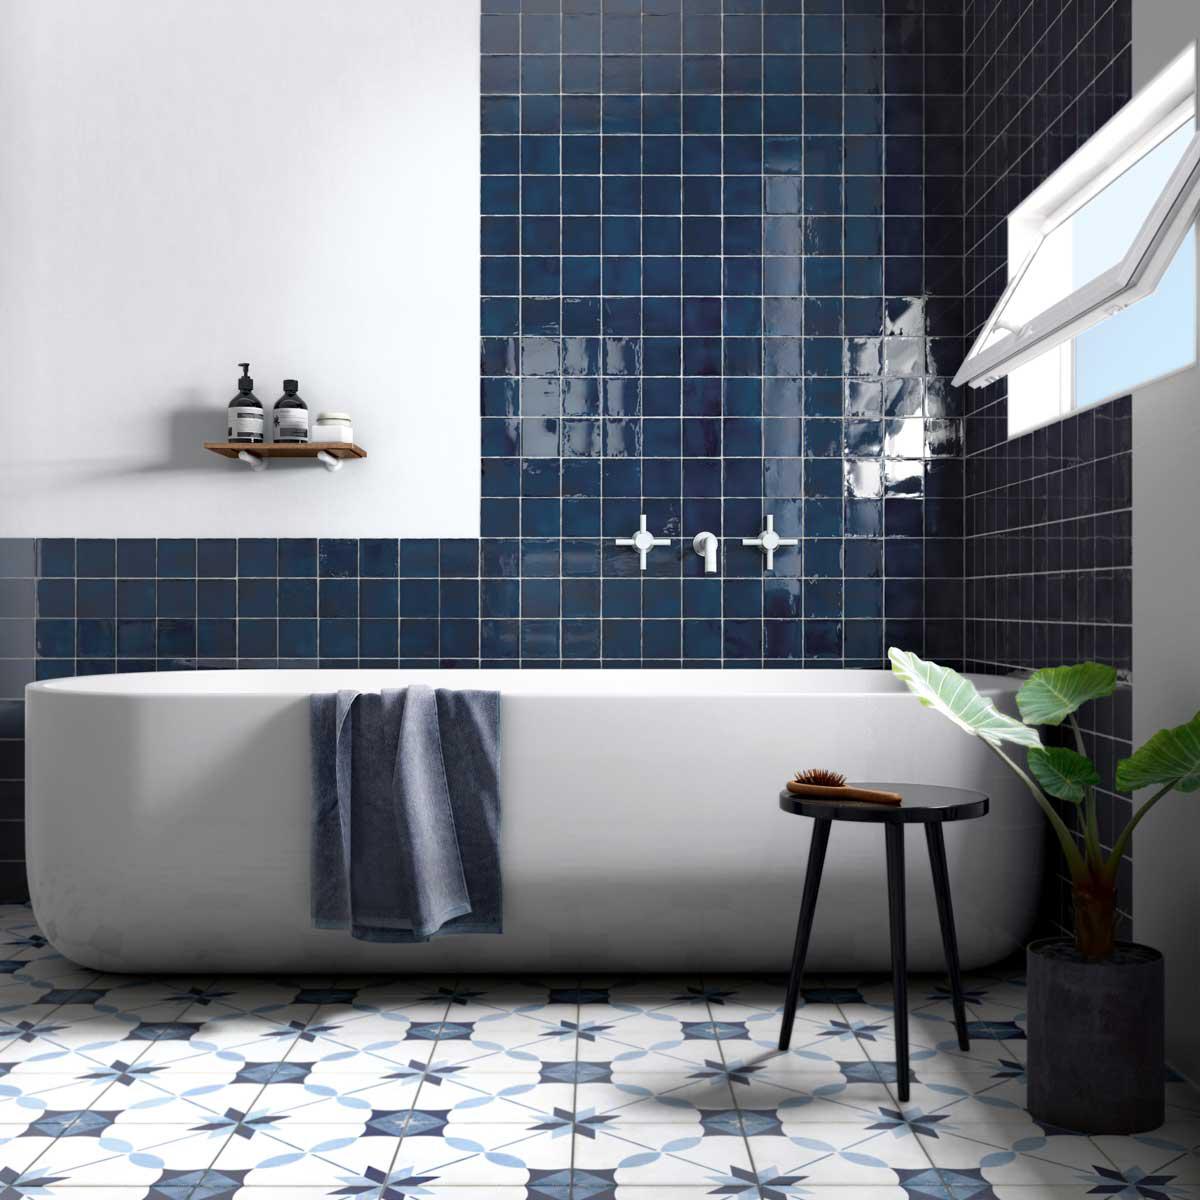 Lake Ocean jewel tone blue ceramic bathroom wall tiles